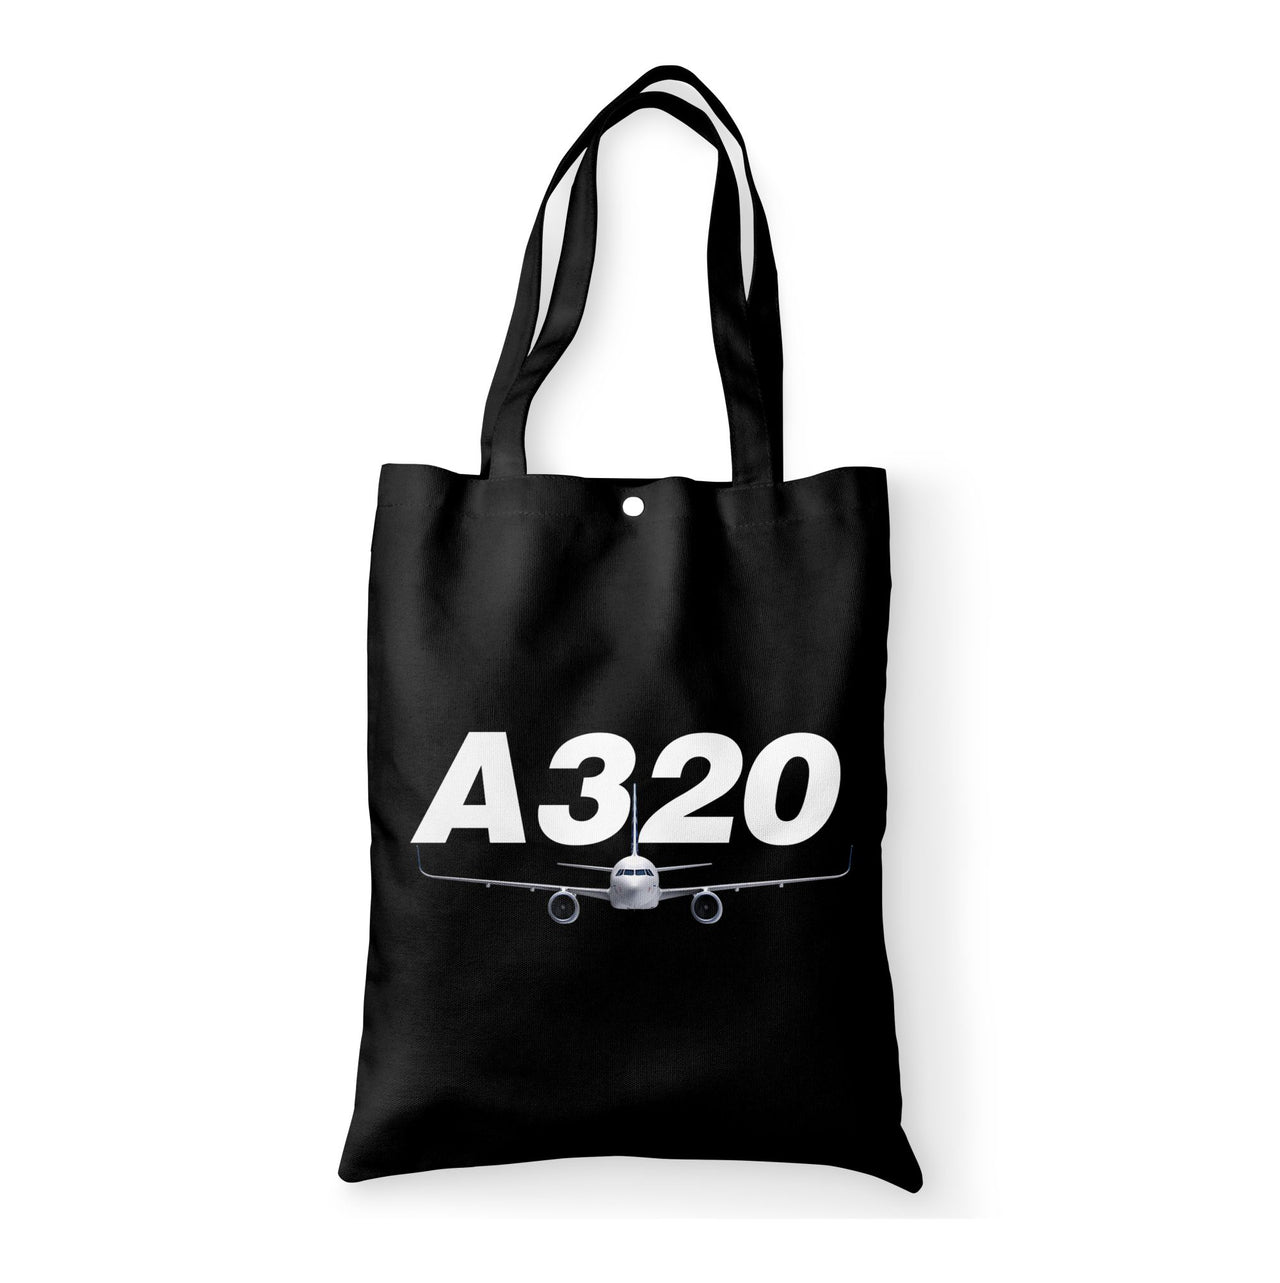 Super Airbus A320 Designed Tote Bags